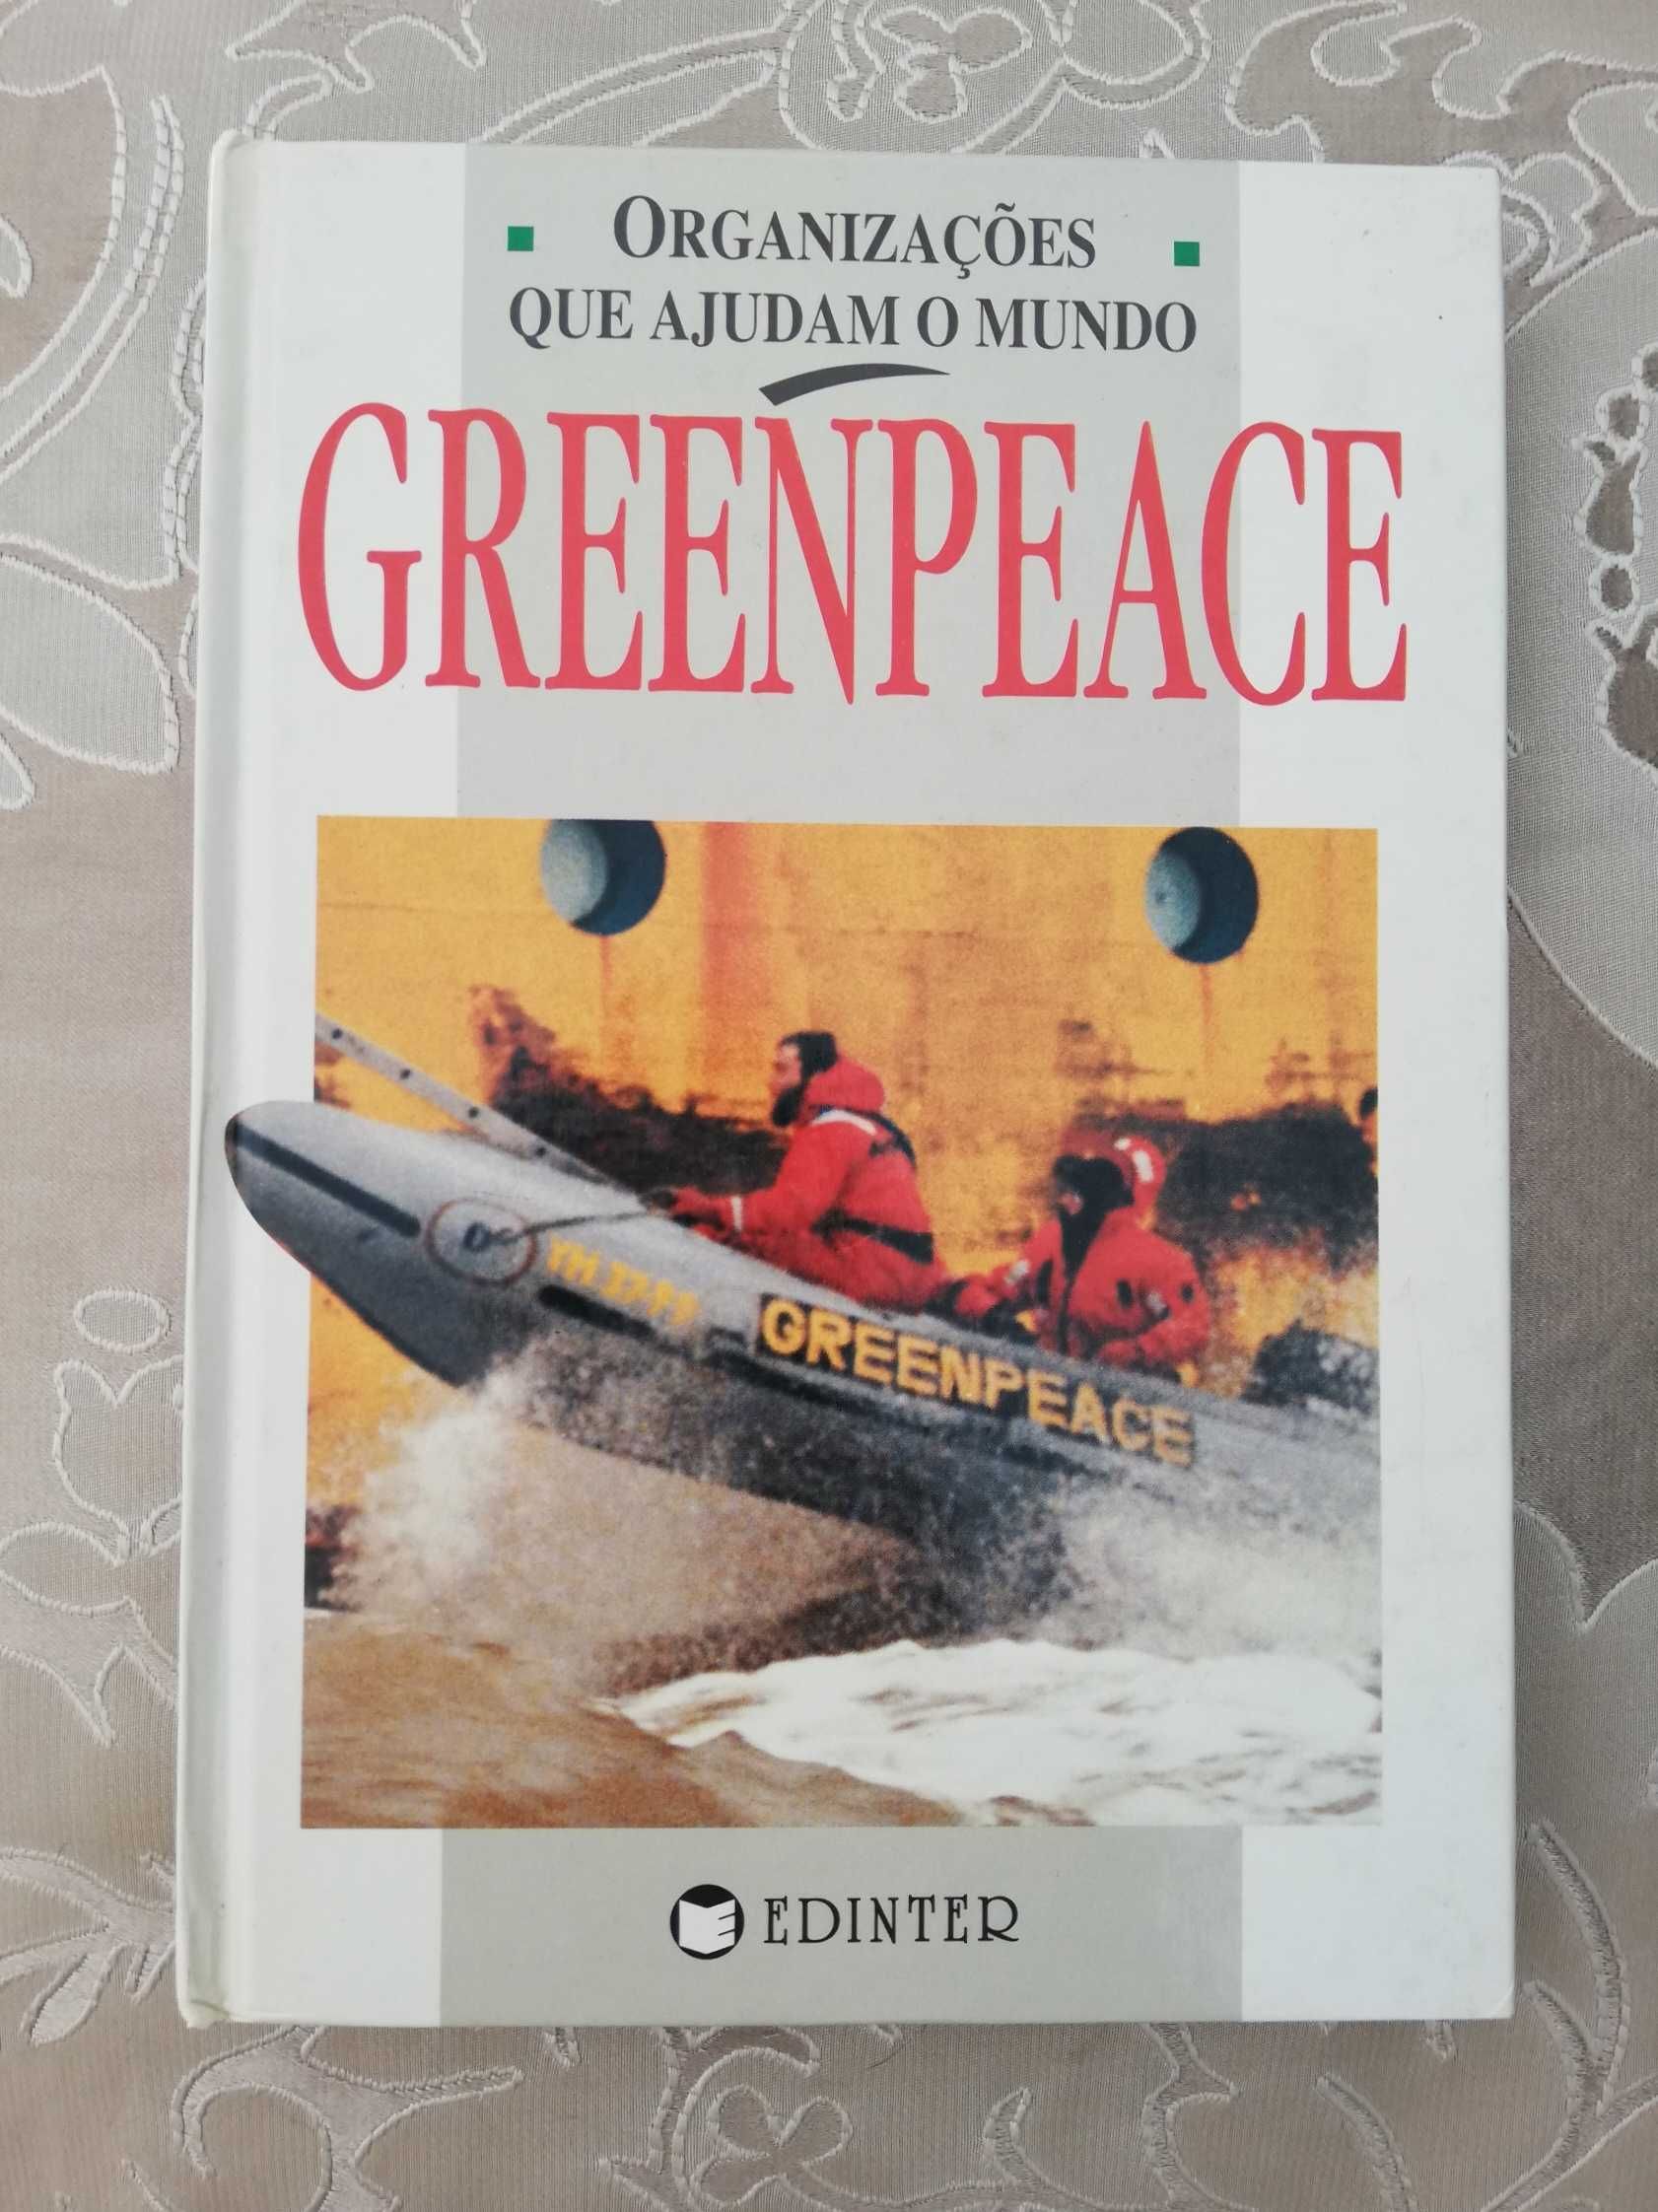 Livro "Greenpeace"